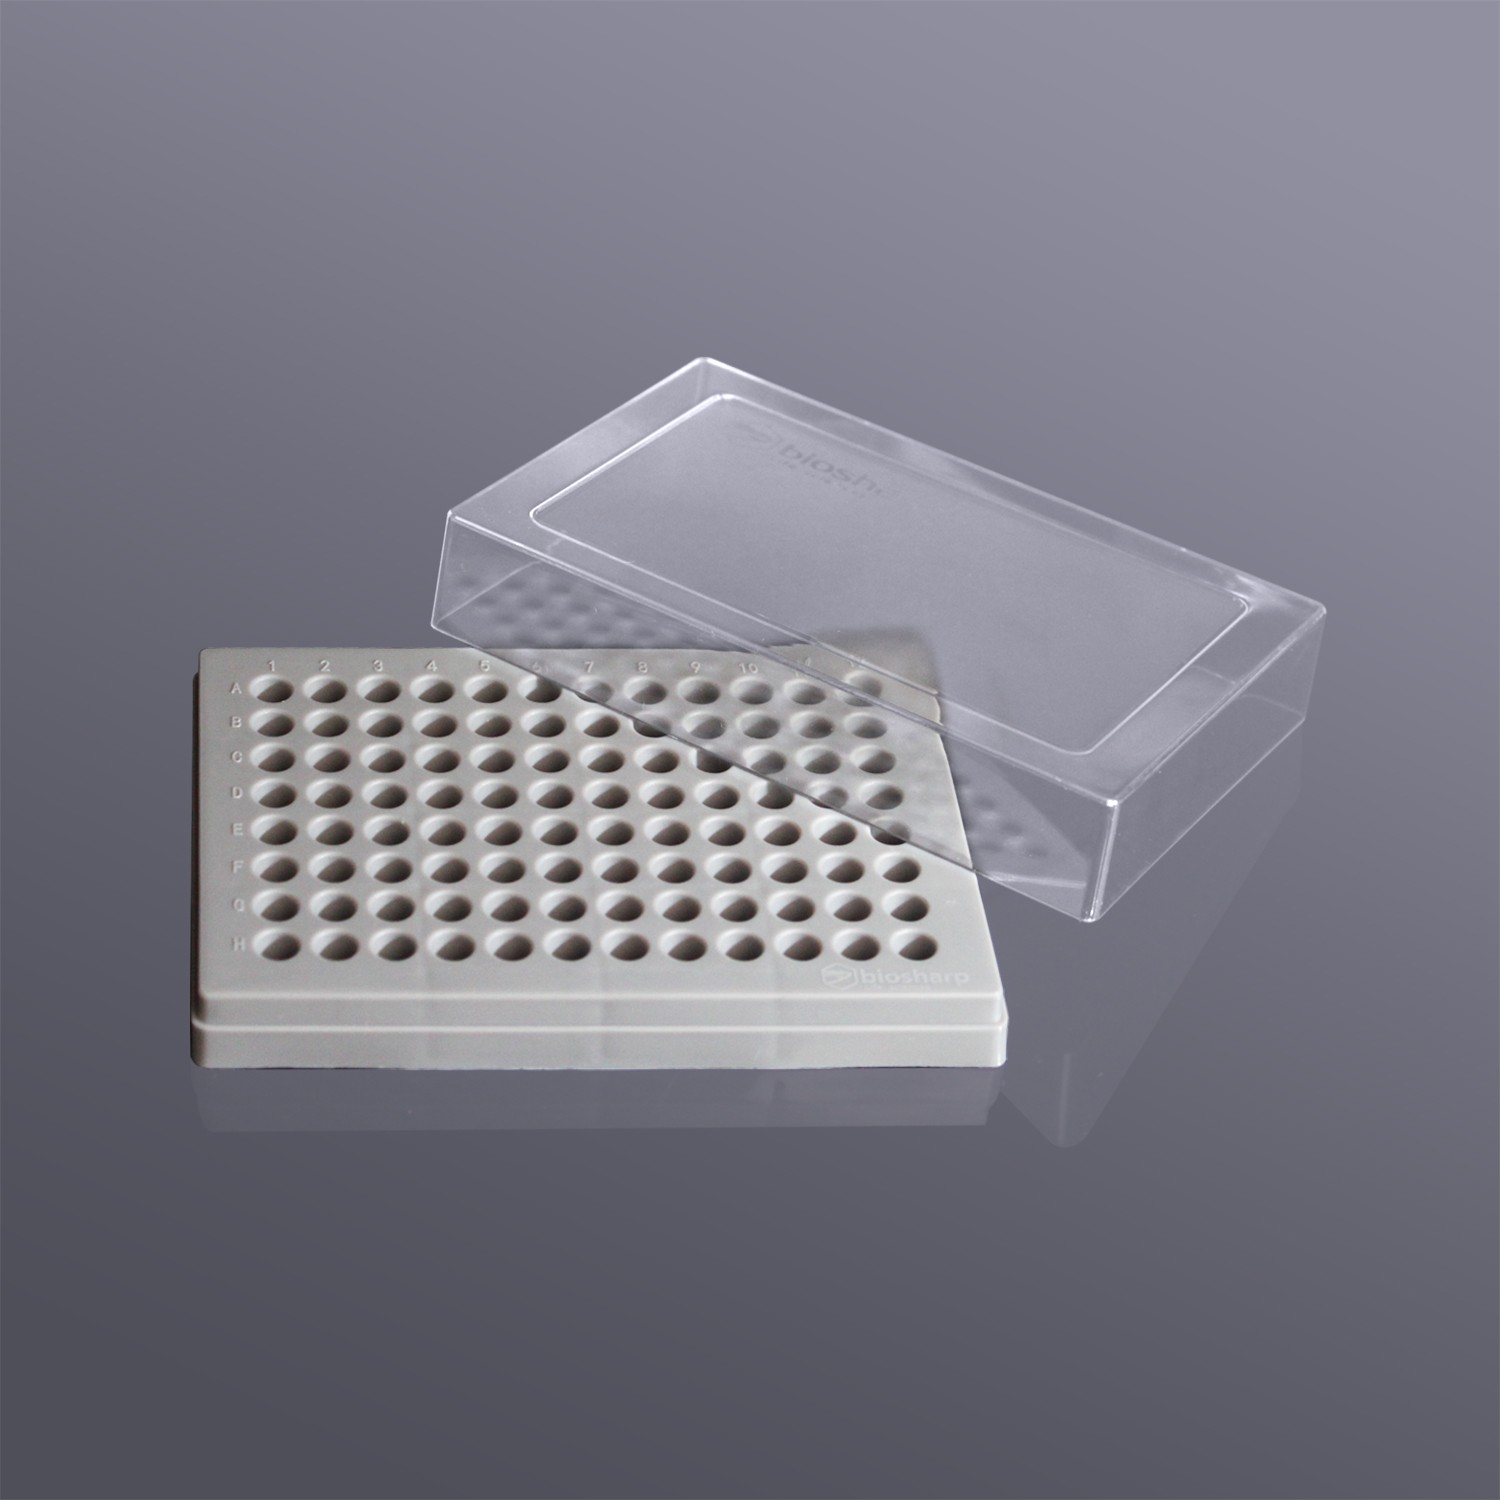 Biosharp BS-02-PB96-PC-G 0.2ml薄壁管盒(PC),灰色